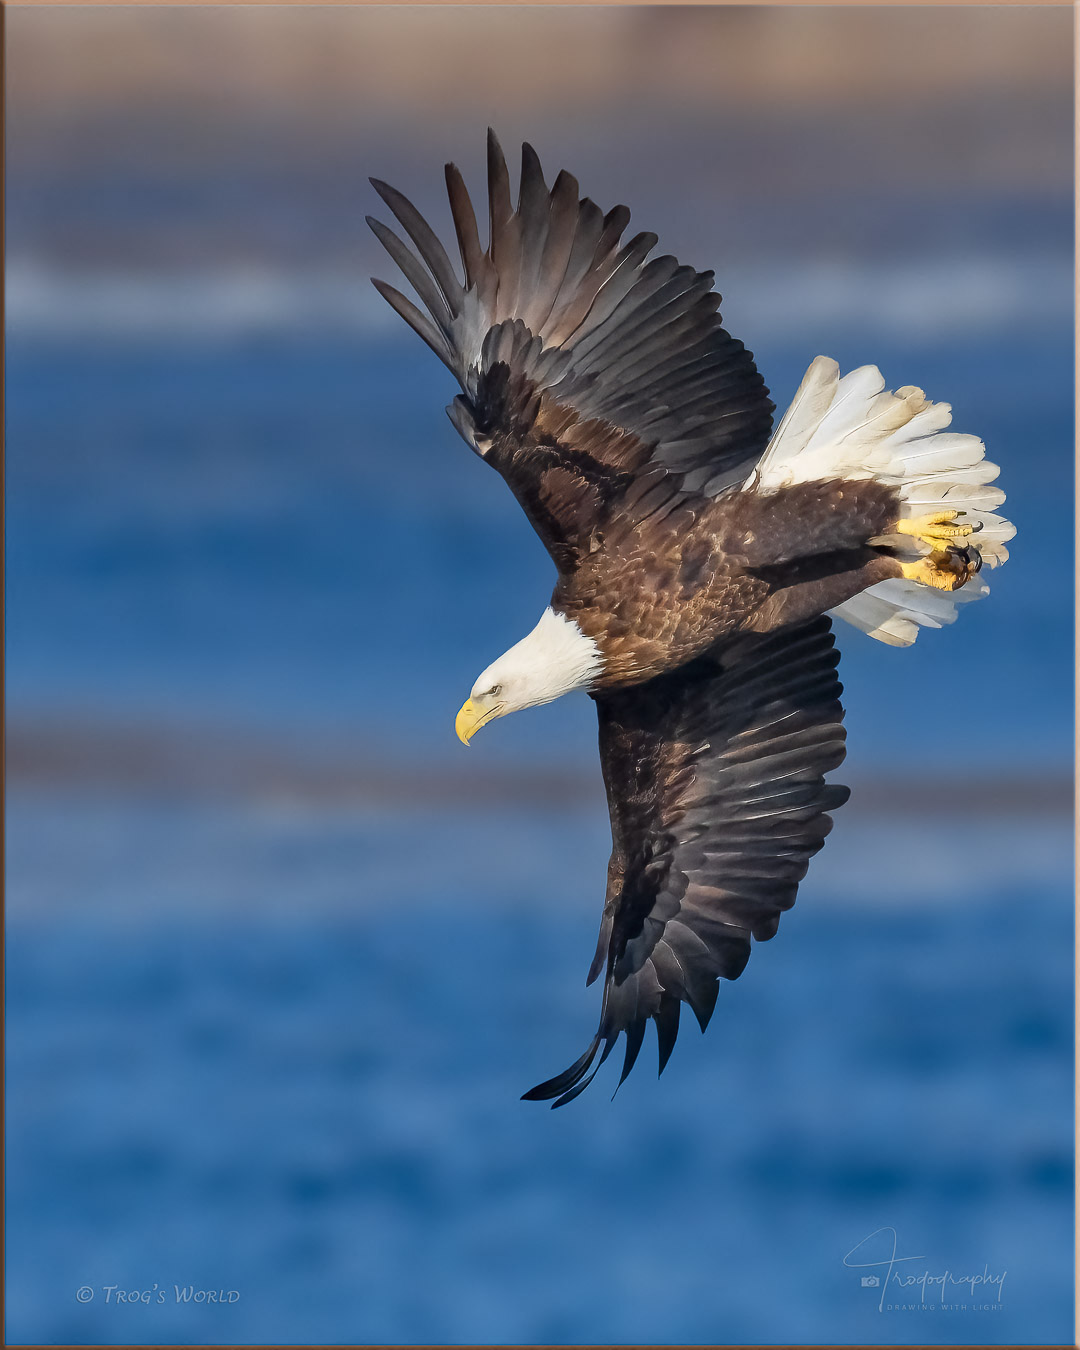 American Bald Eagle in dive mode